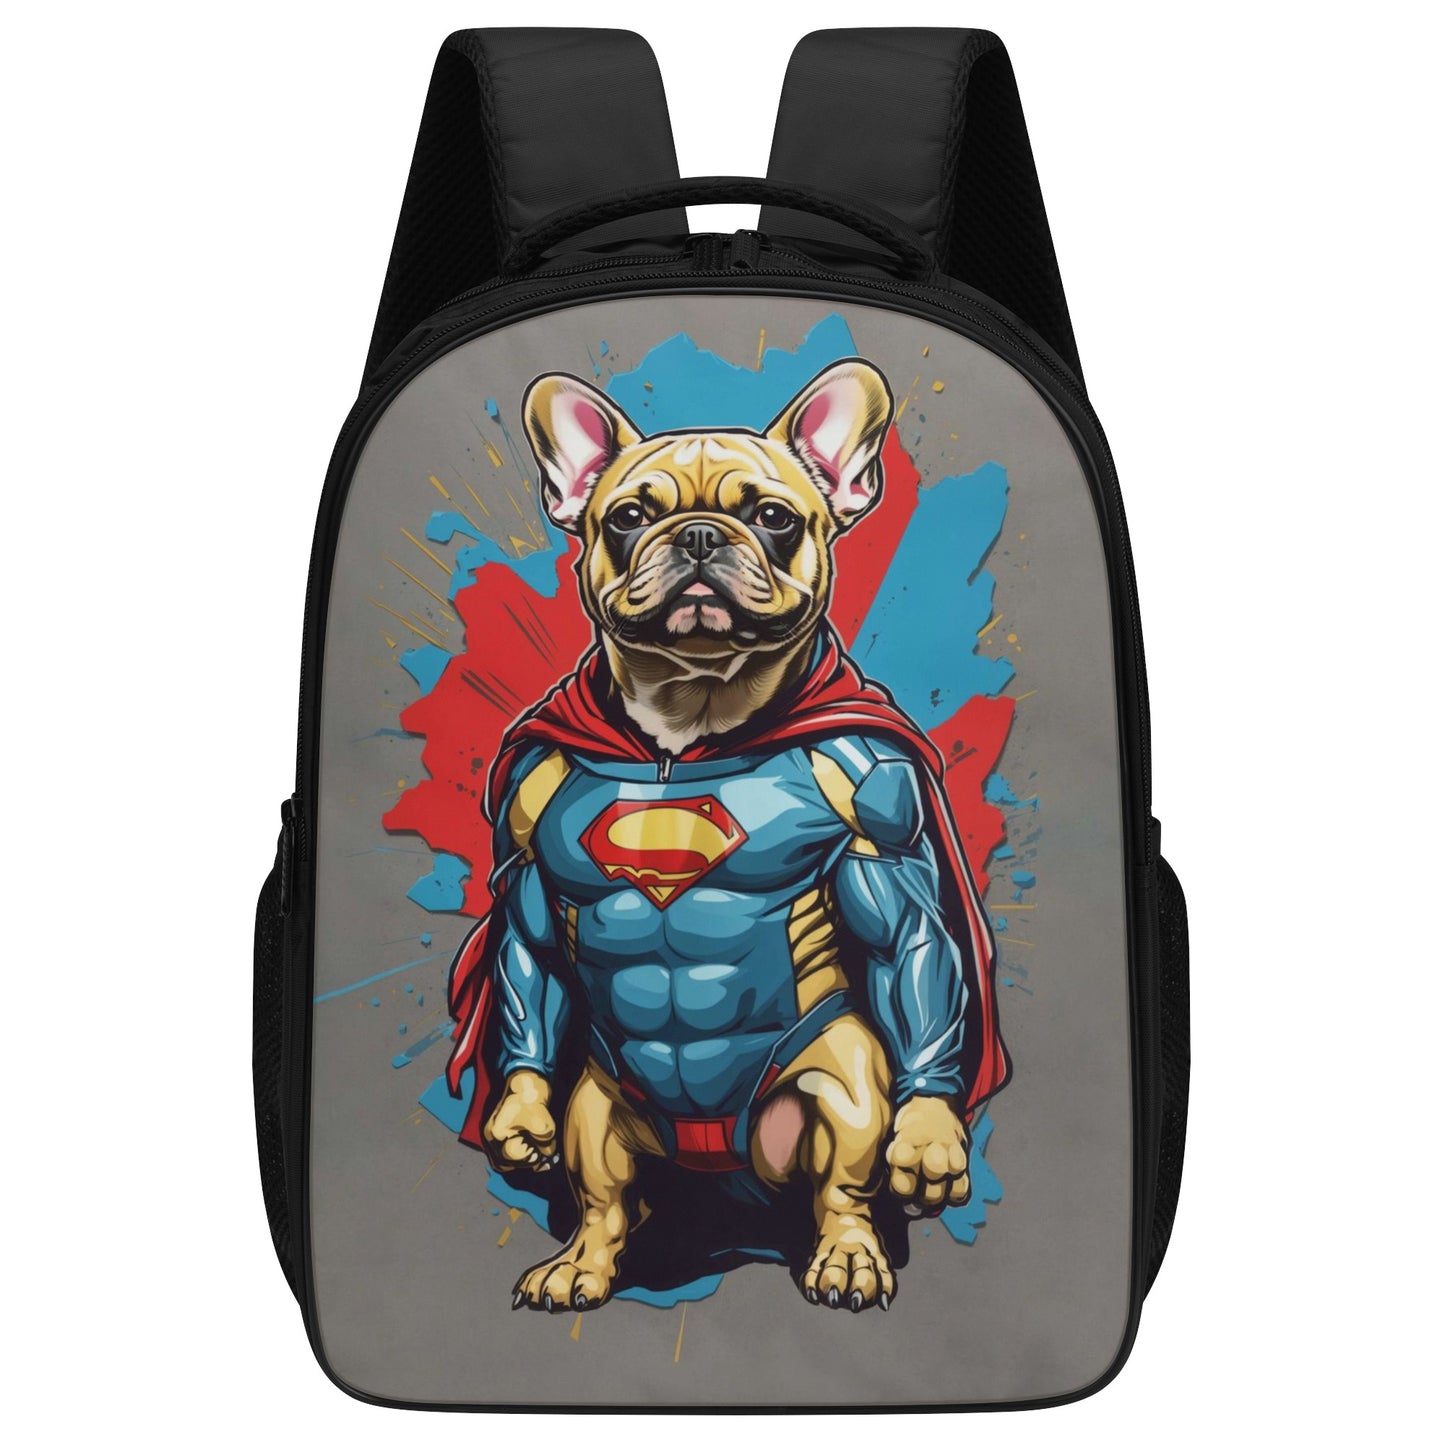 Super Power -  Backpack